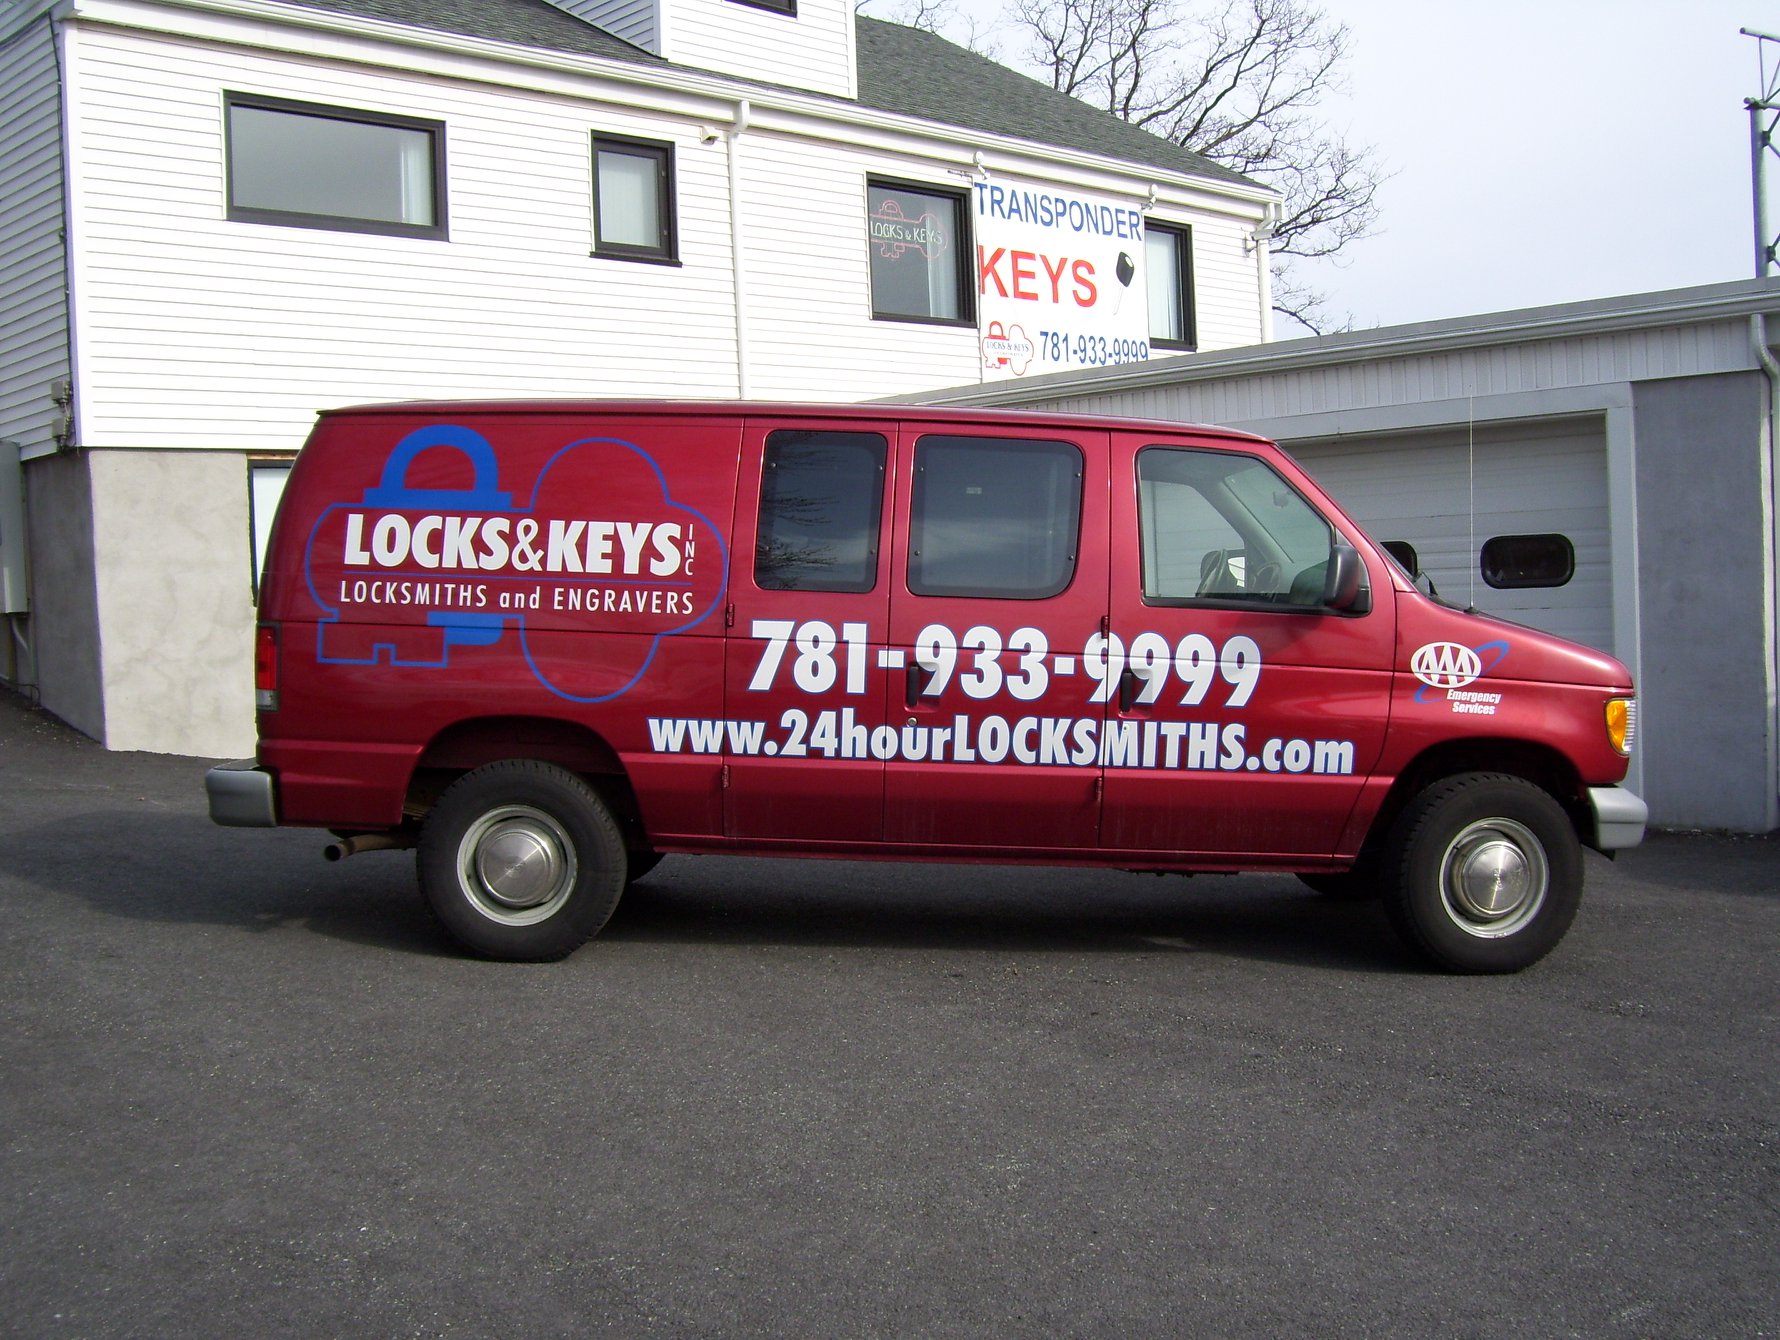 Locks & Keys Inc. - Emergency Services - Tewksbury MA locksmith